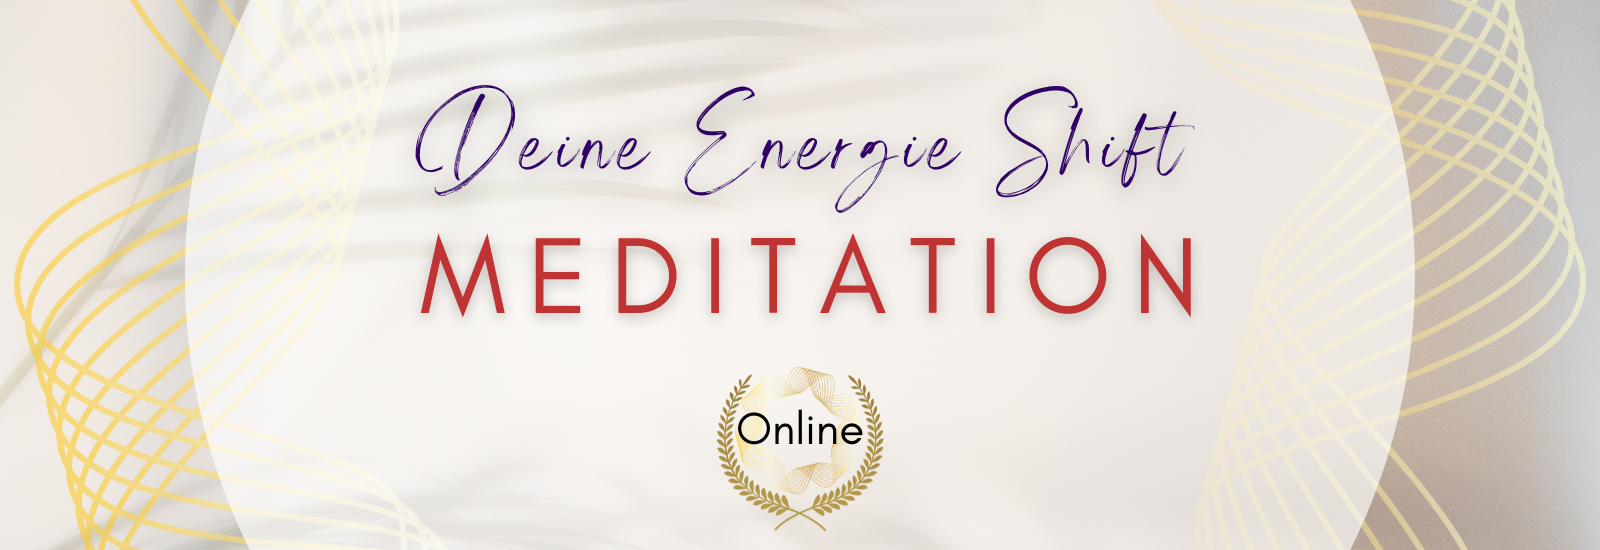 Energie Shift Meditation - Online - Button